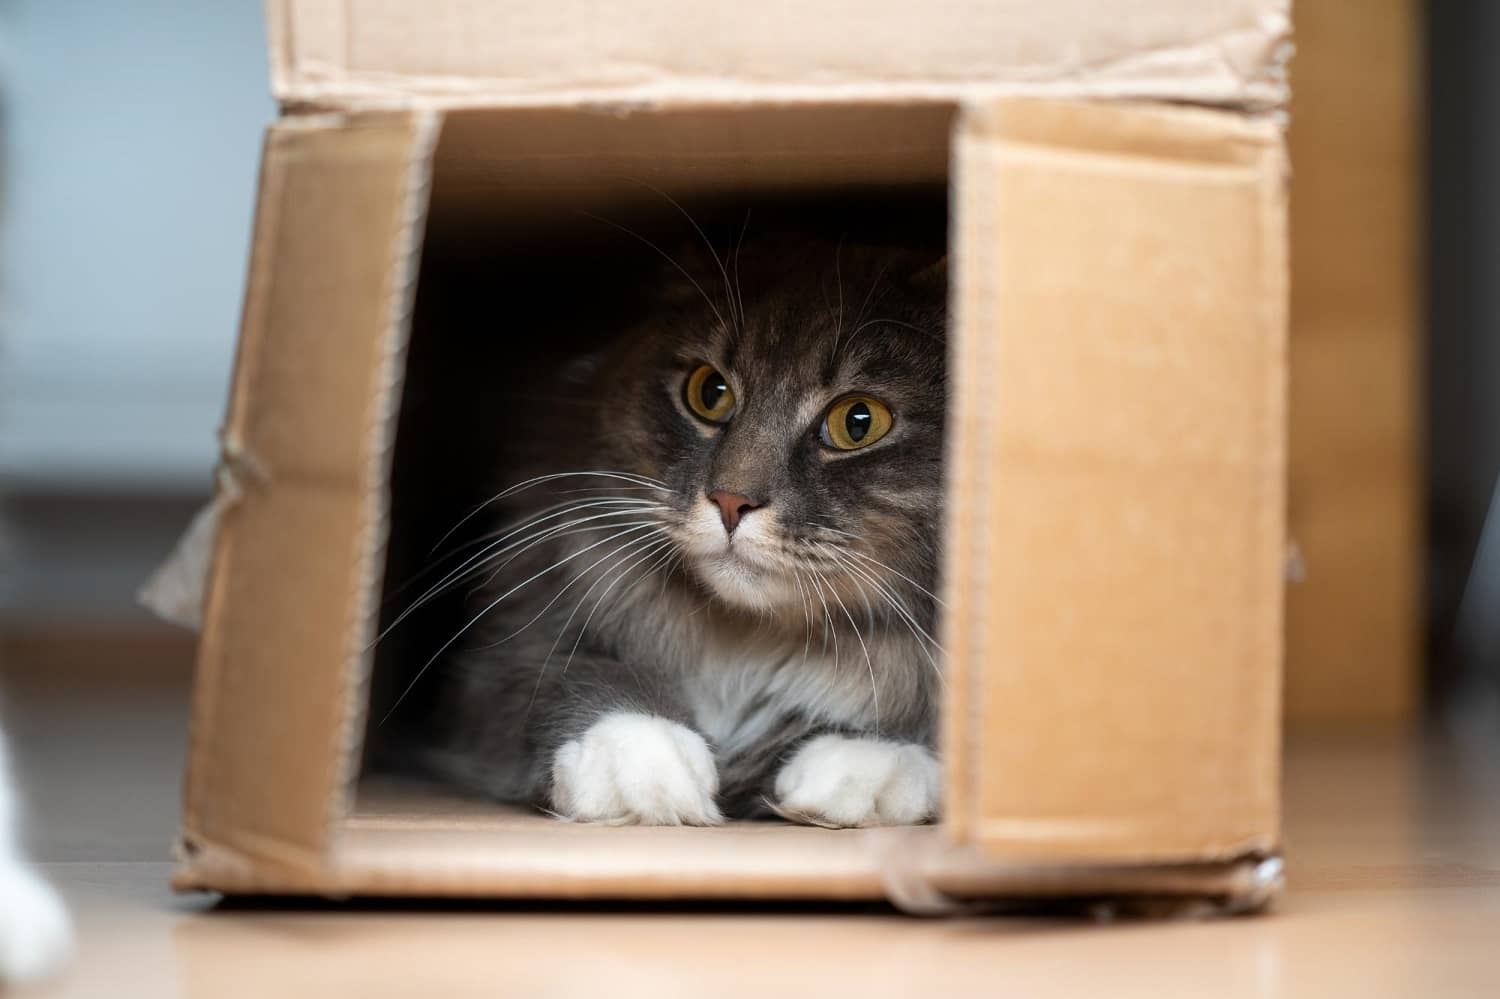 Cat in a box preparing to move home